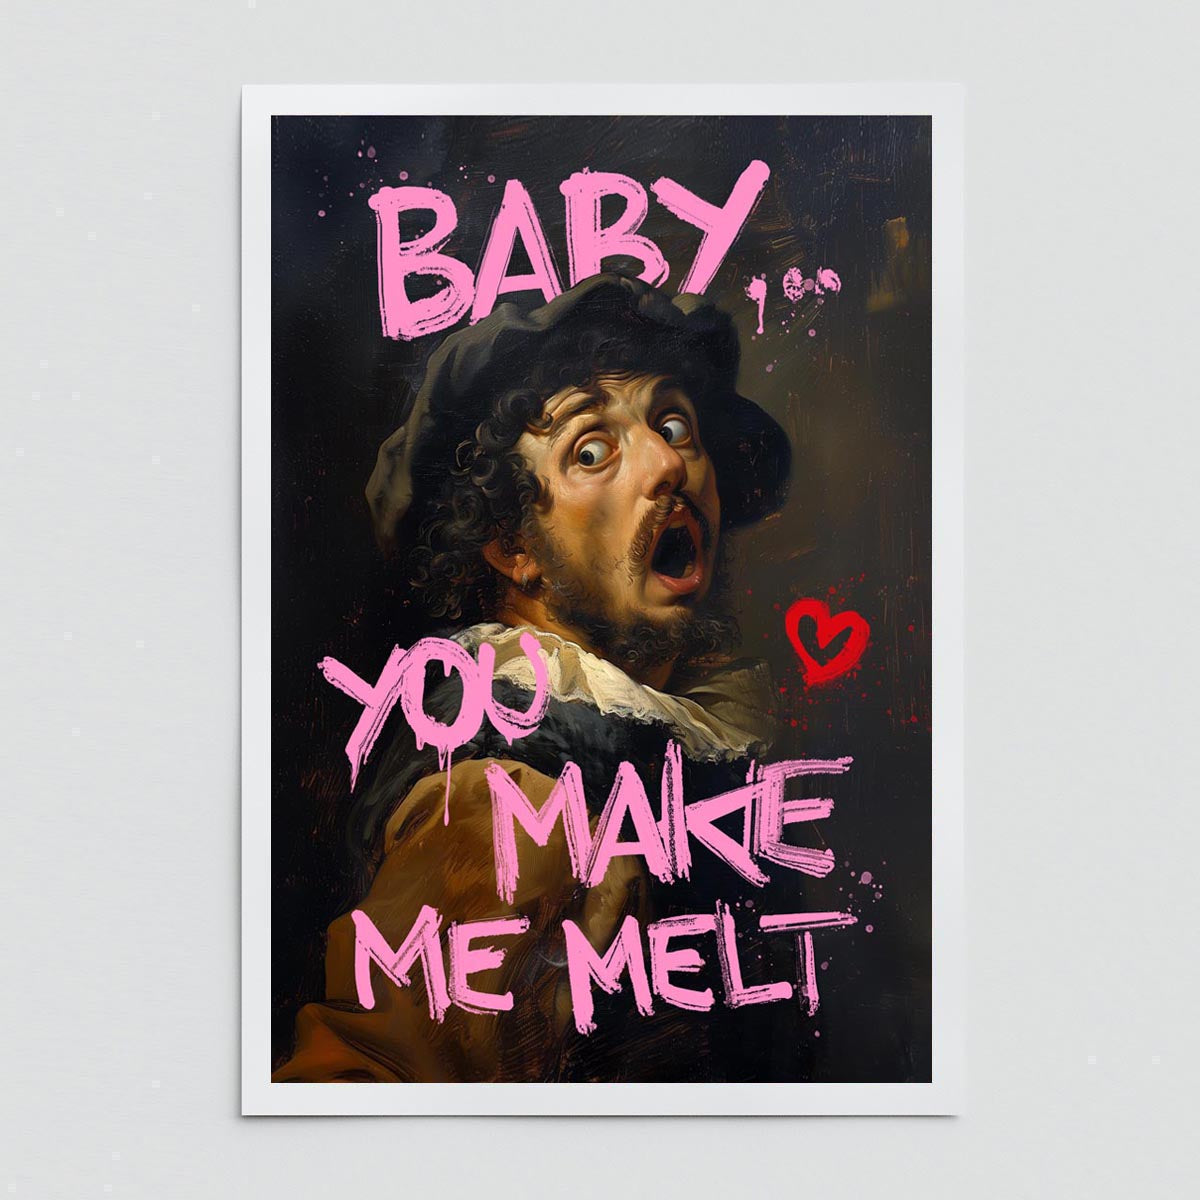 "Baby you make me melt" fine art print